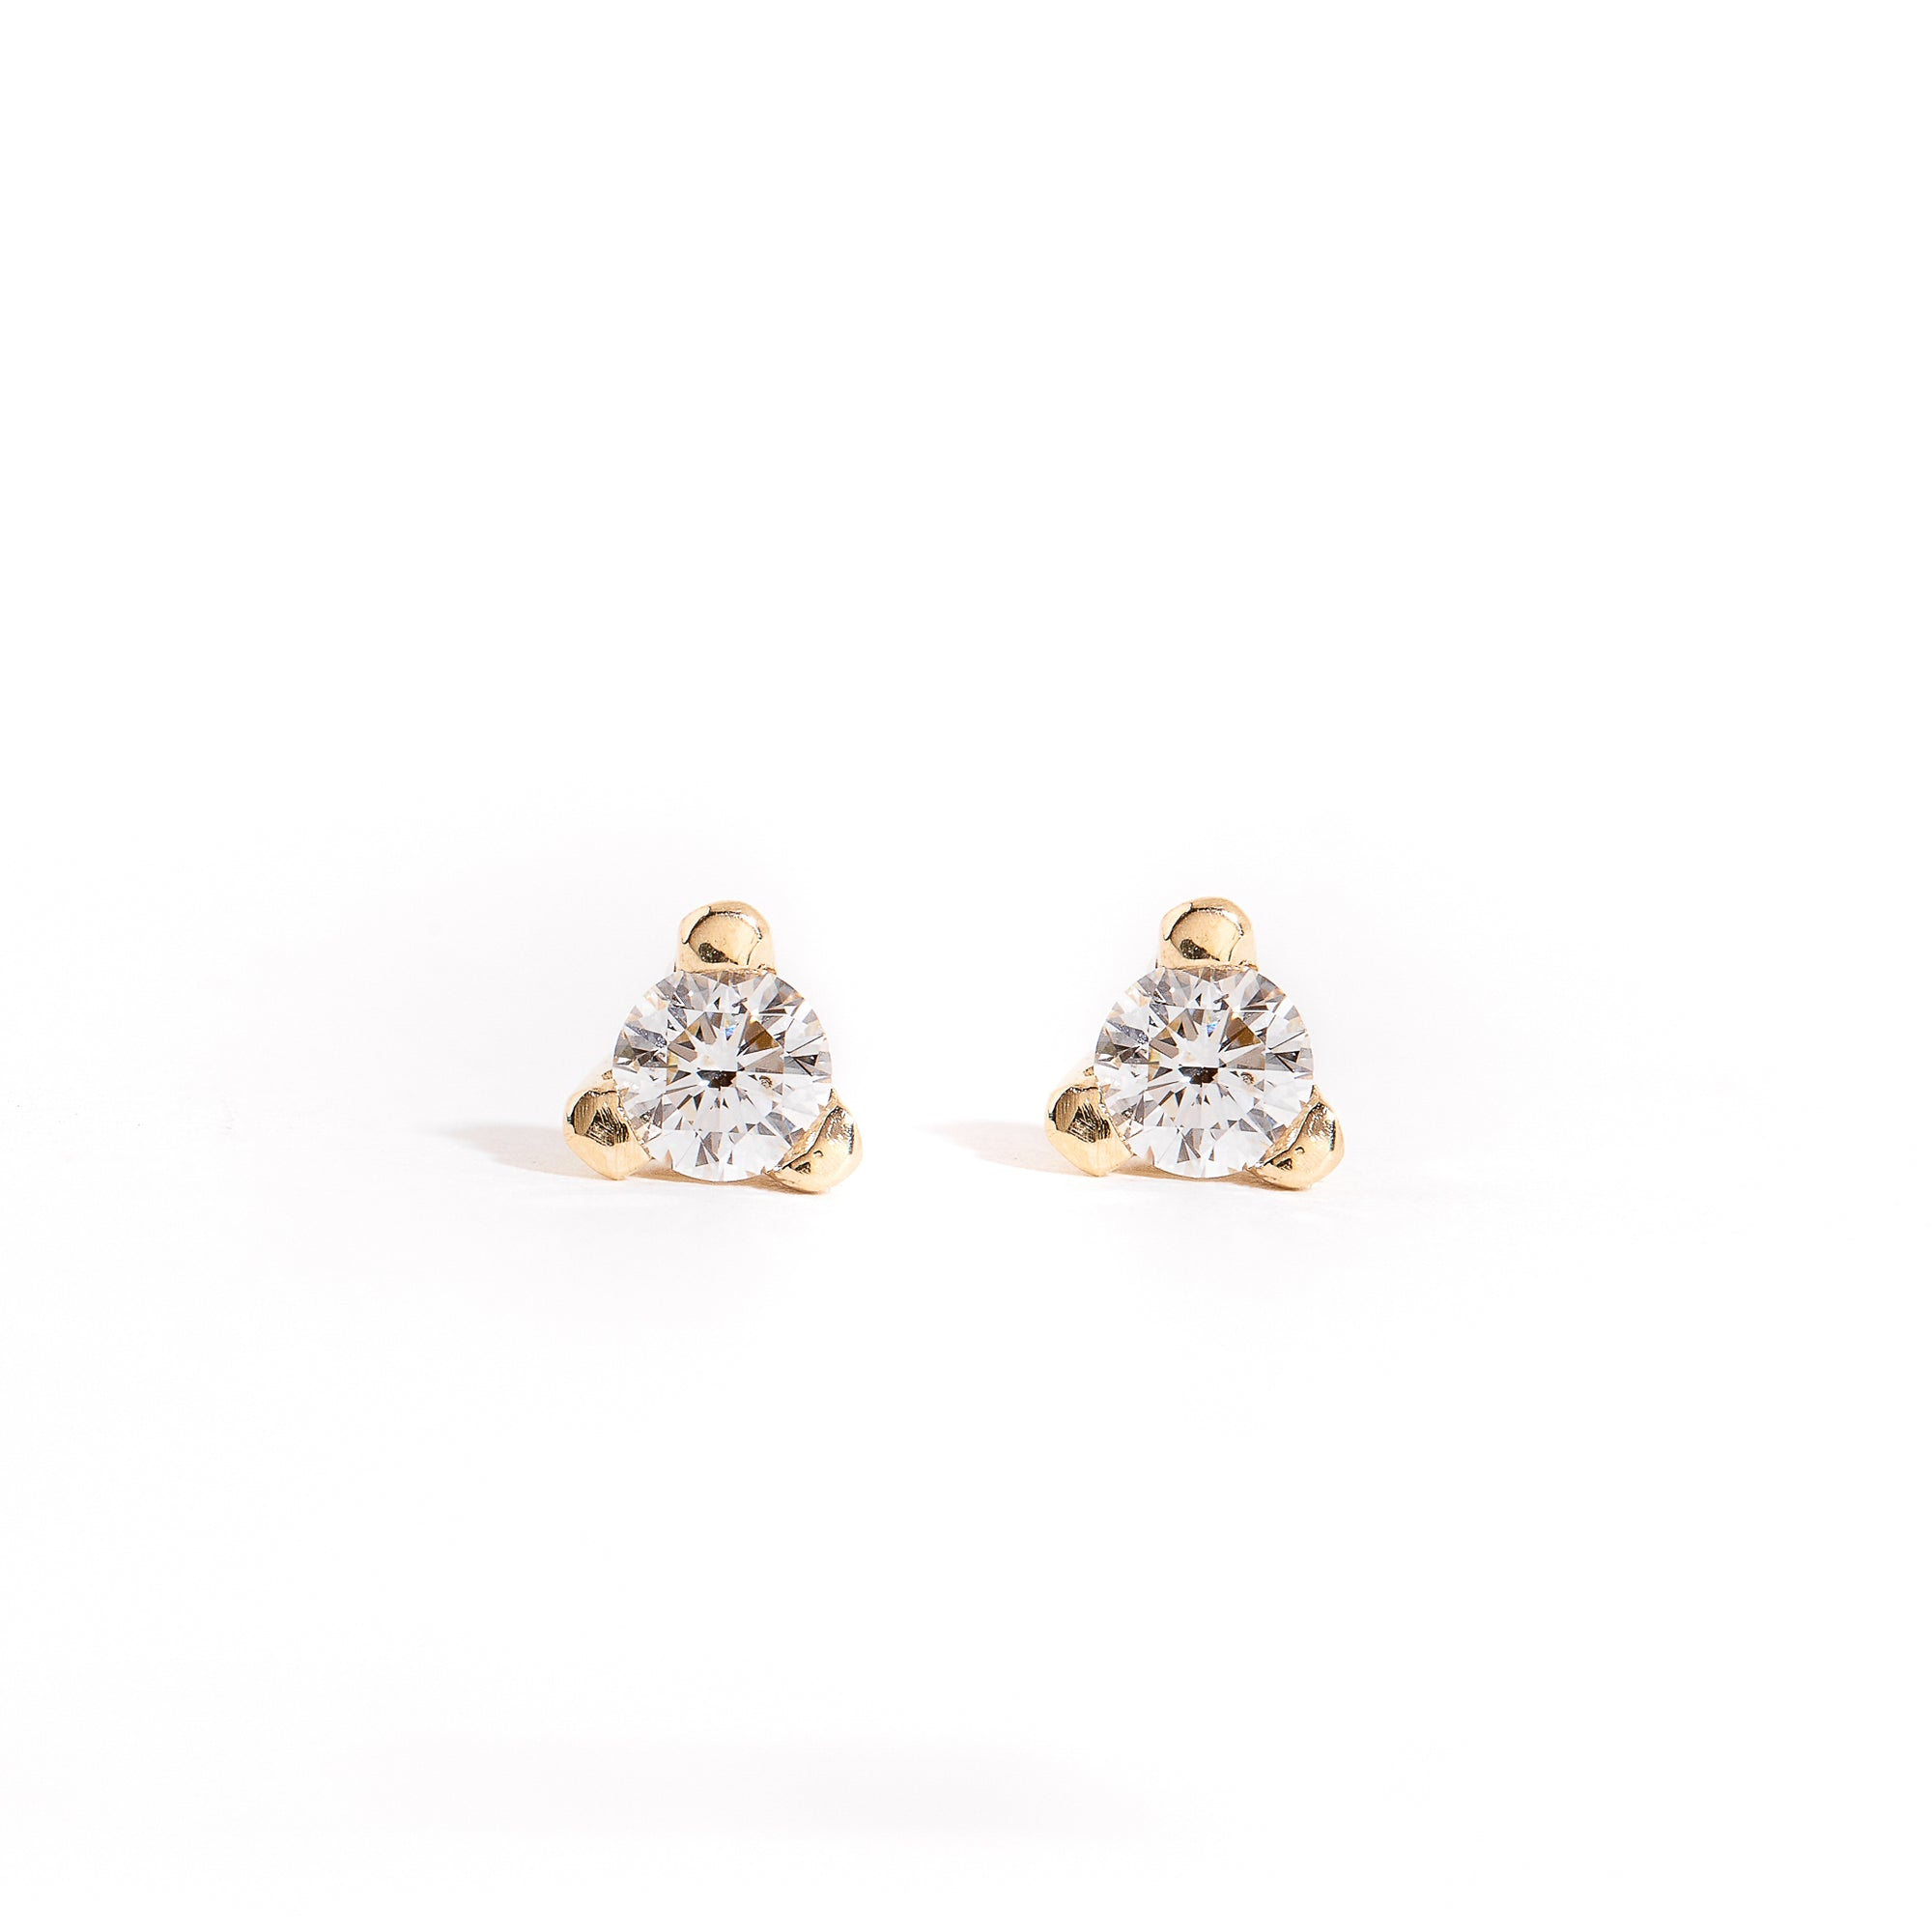 Statement Diamond Stud Earrings in 9ct Yellow Gold